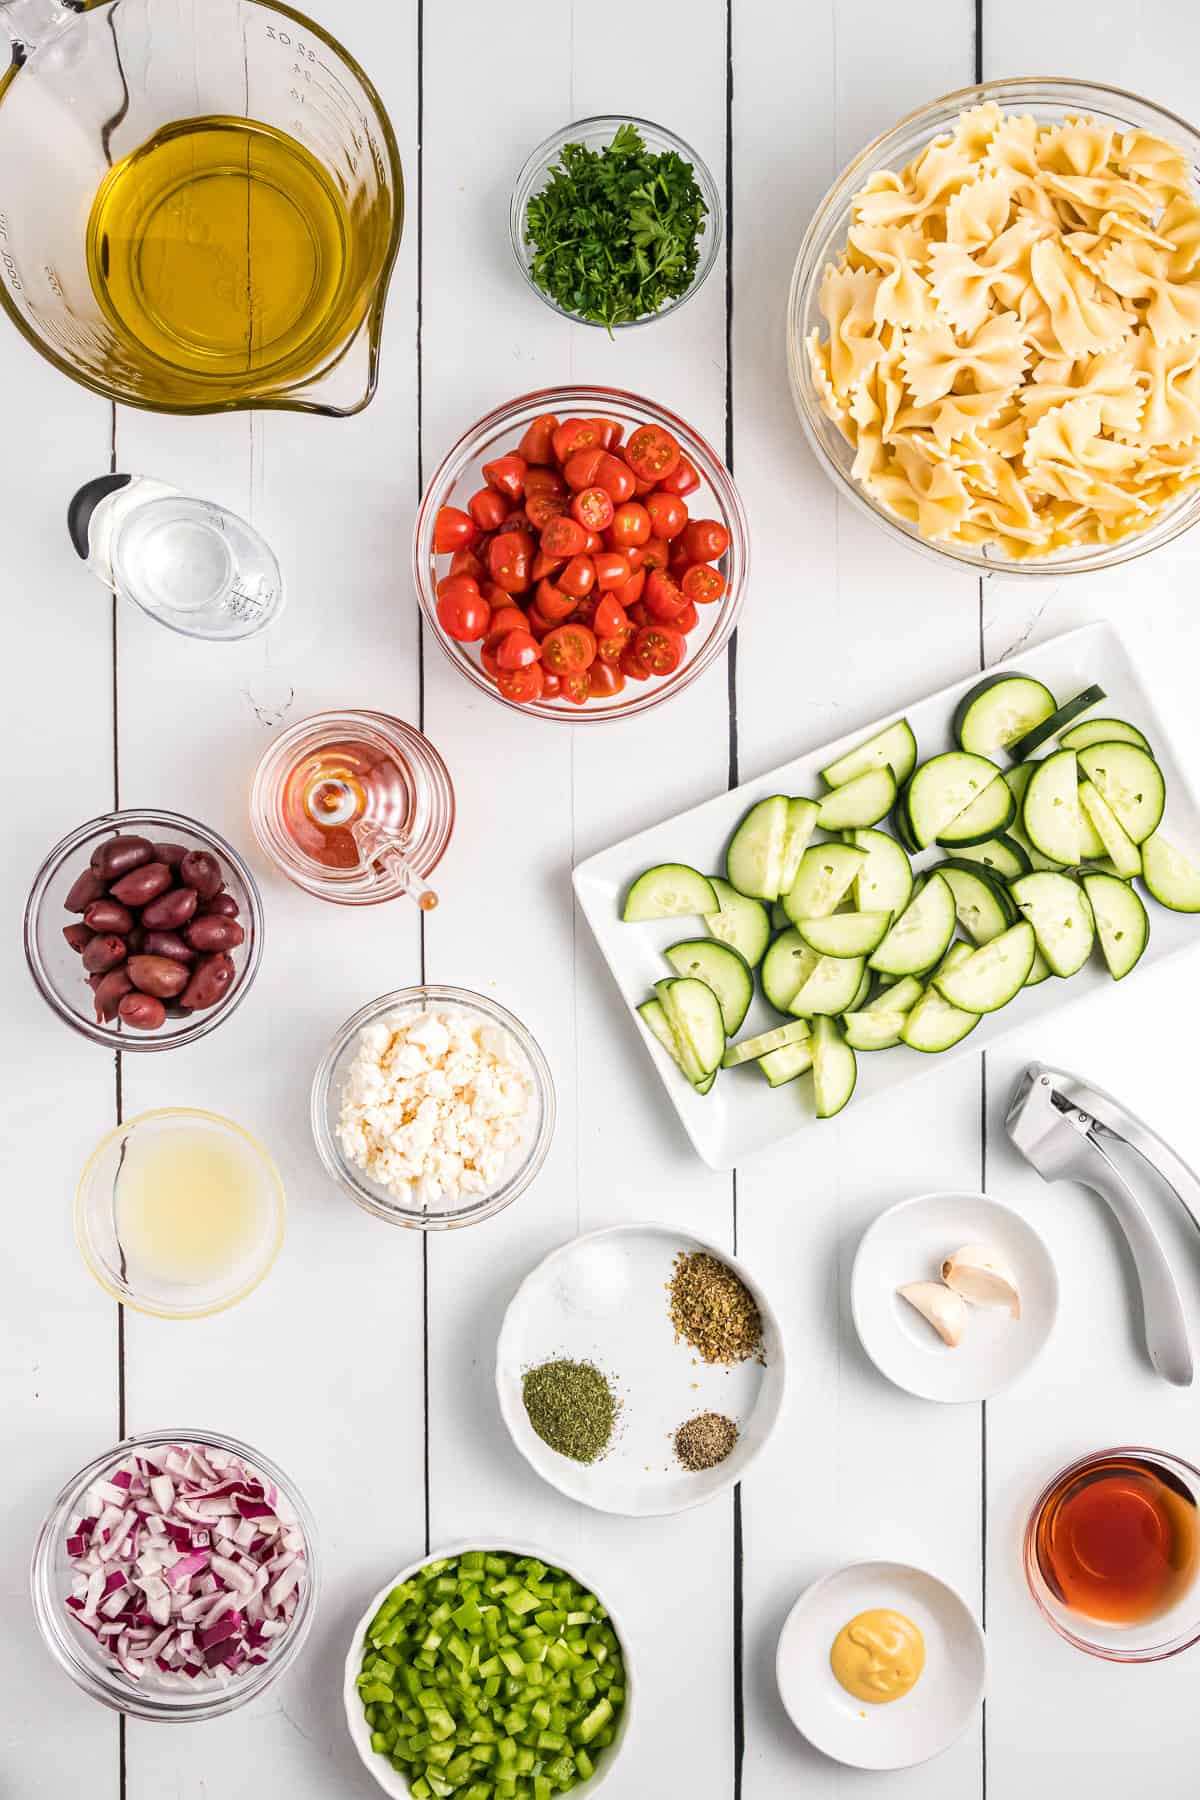 Bowls holding the ingredients for making Greek pasta salad.